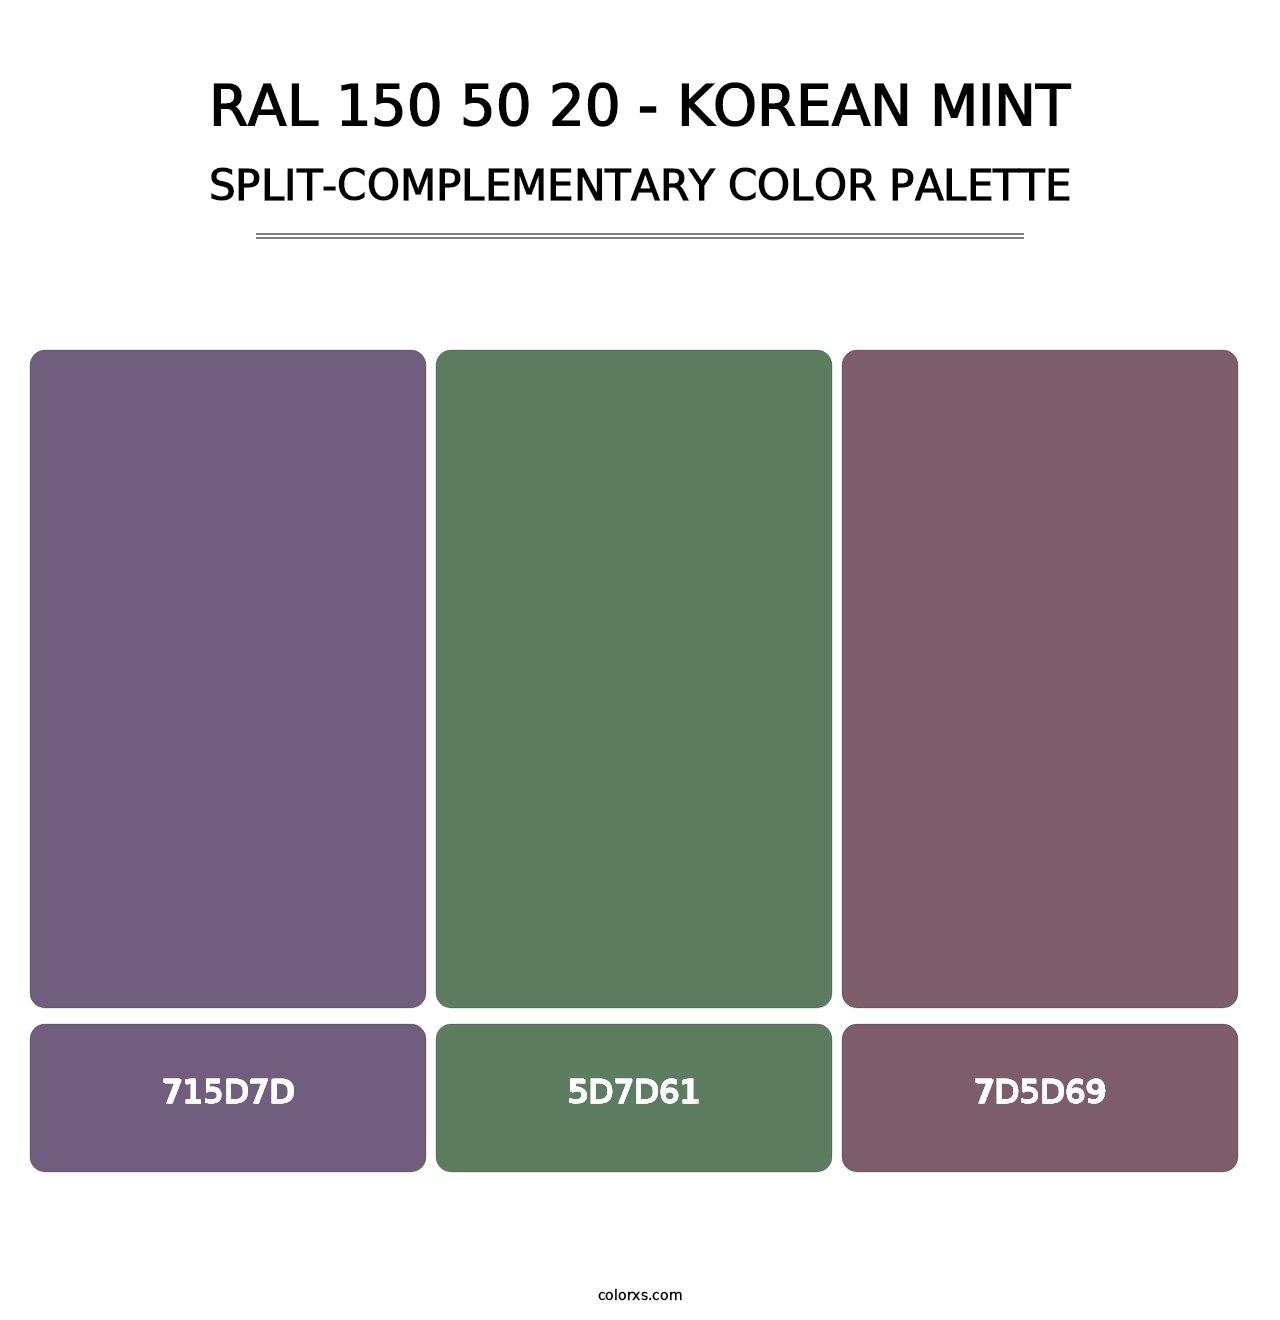 RAL 150 50 20 - Korean Mint - Split-Complementary Color Palette